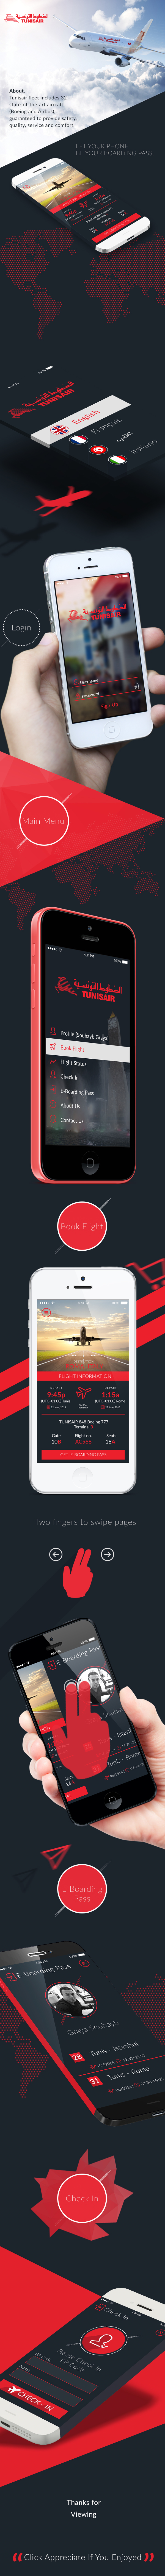 ios ios7 Tunisair tunisia Tunisie app iphone UI ux Illustrator Fly airplain Webdesign free psd